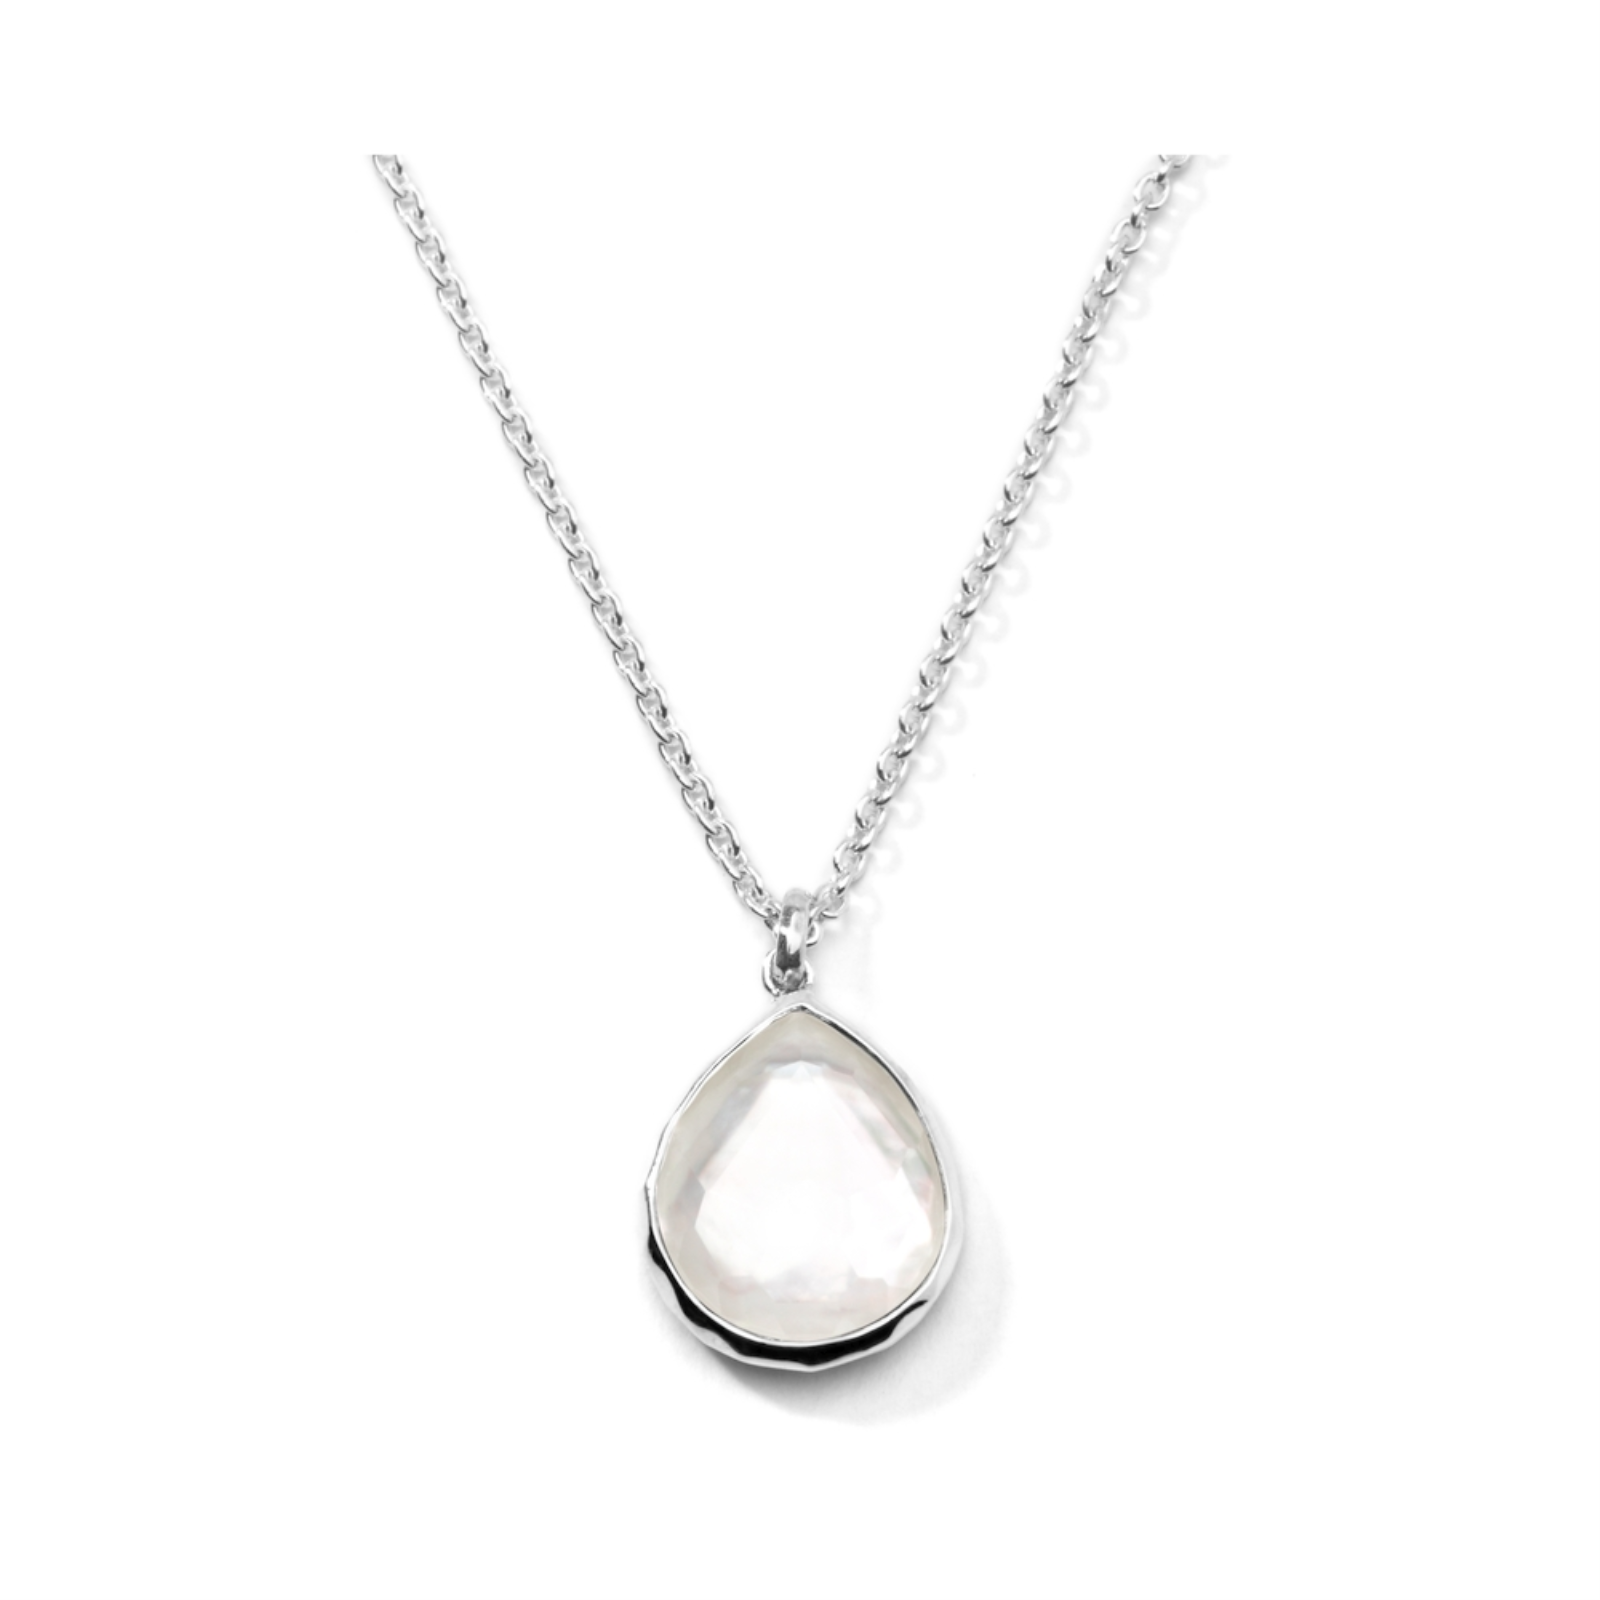 Silver Small Teardrop Pendant Necklace